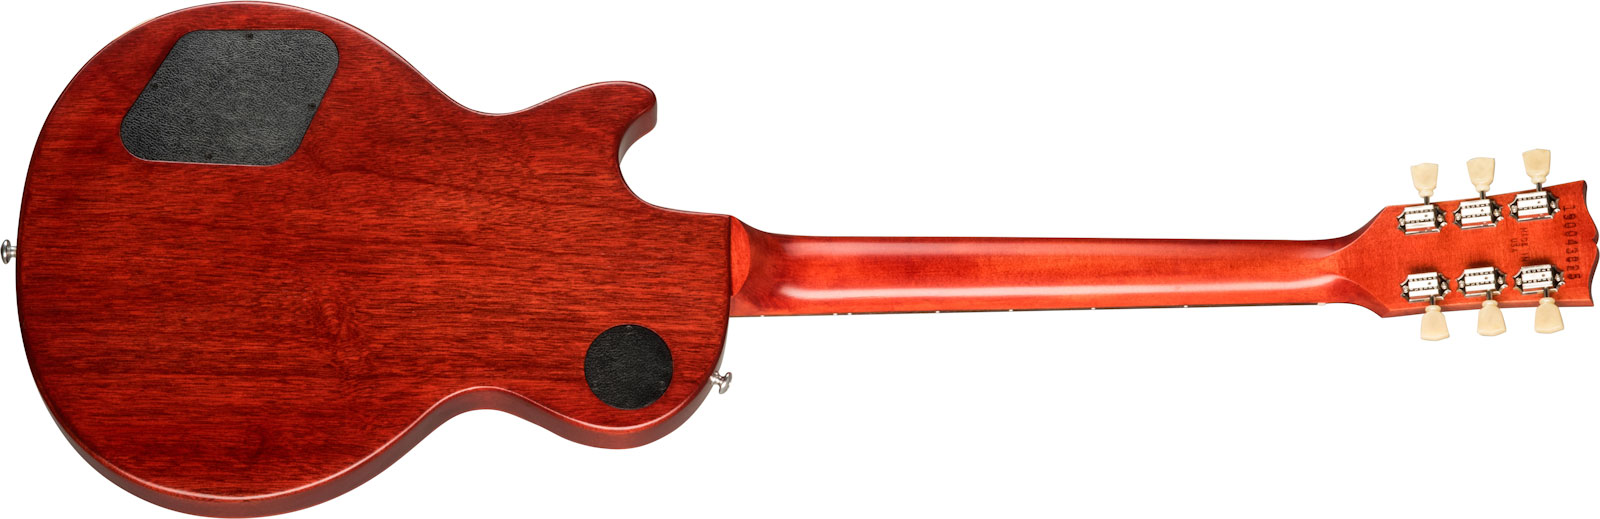 Gibson Les Paul Tribute Modern 2h Ht Rw - Satin Iced Tea - Enkel gesneden elektrische gitaar - Variation 1